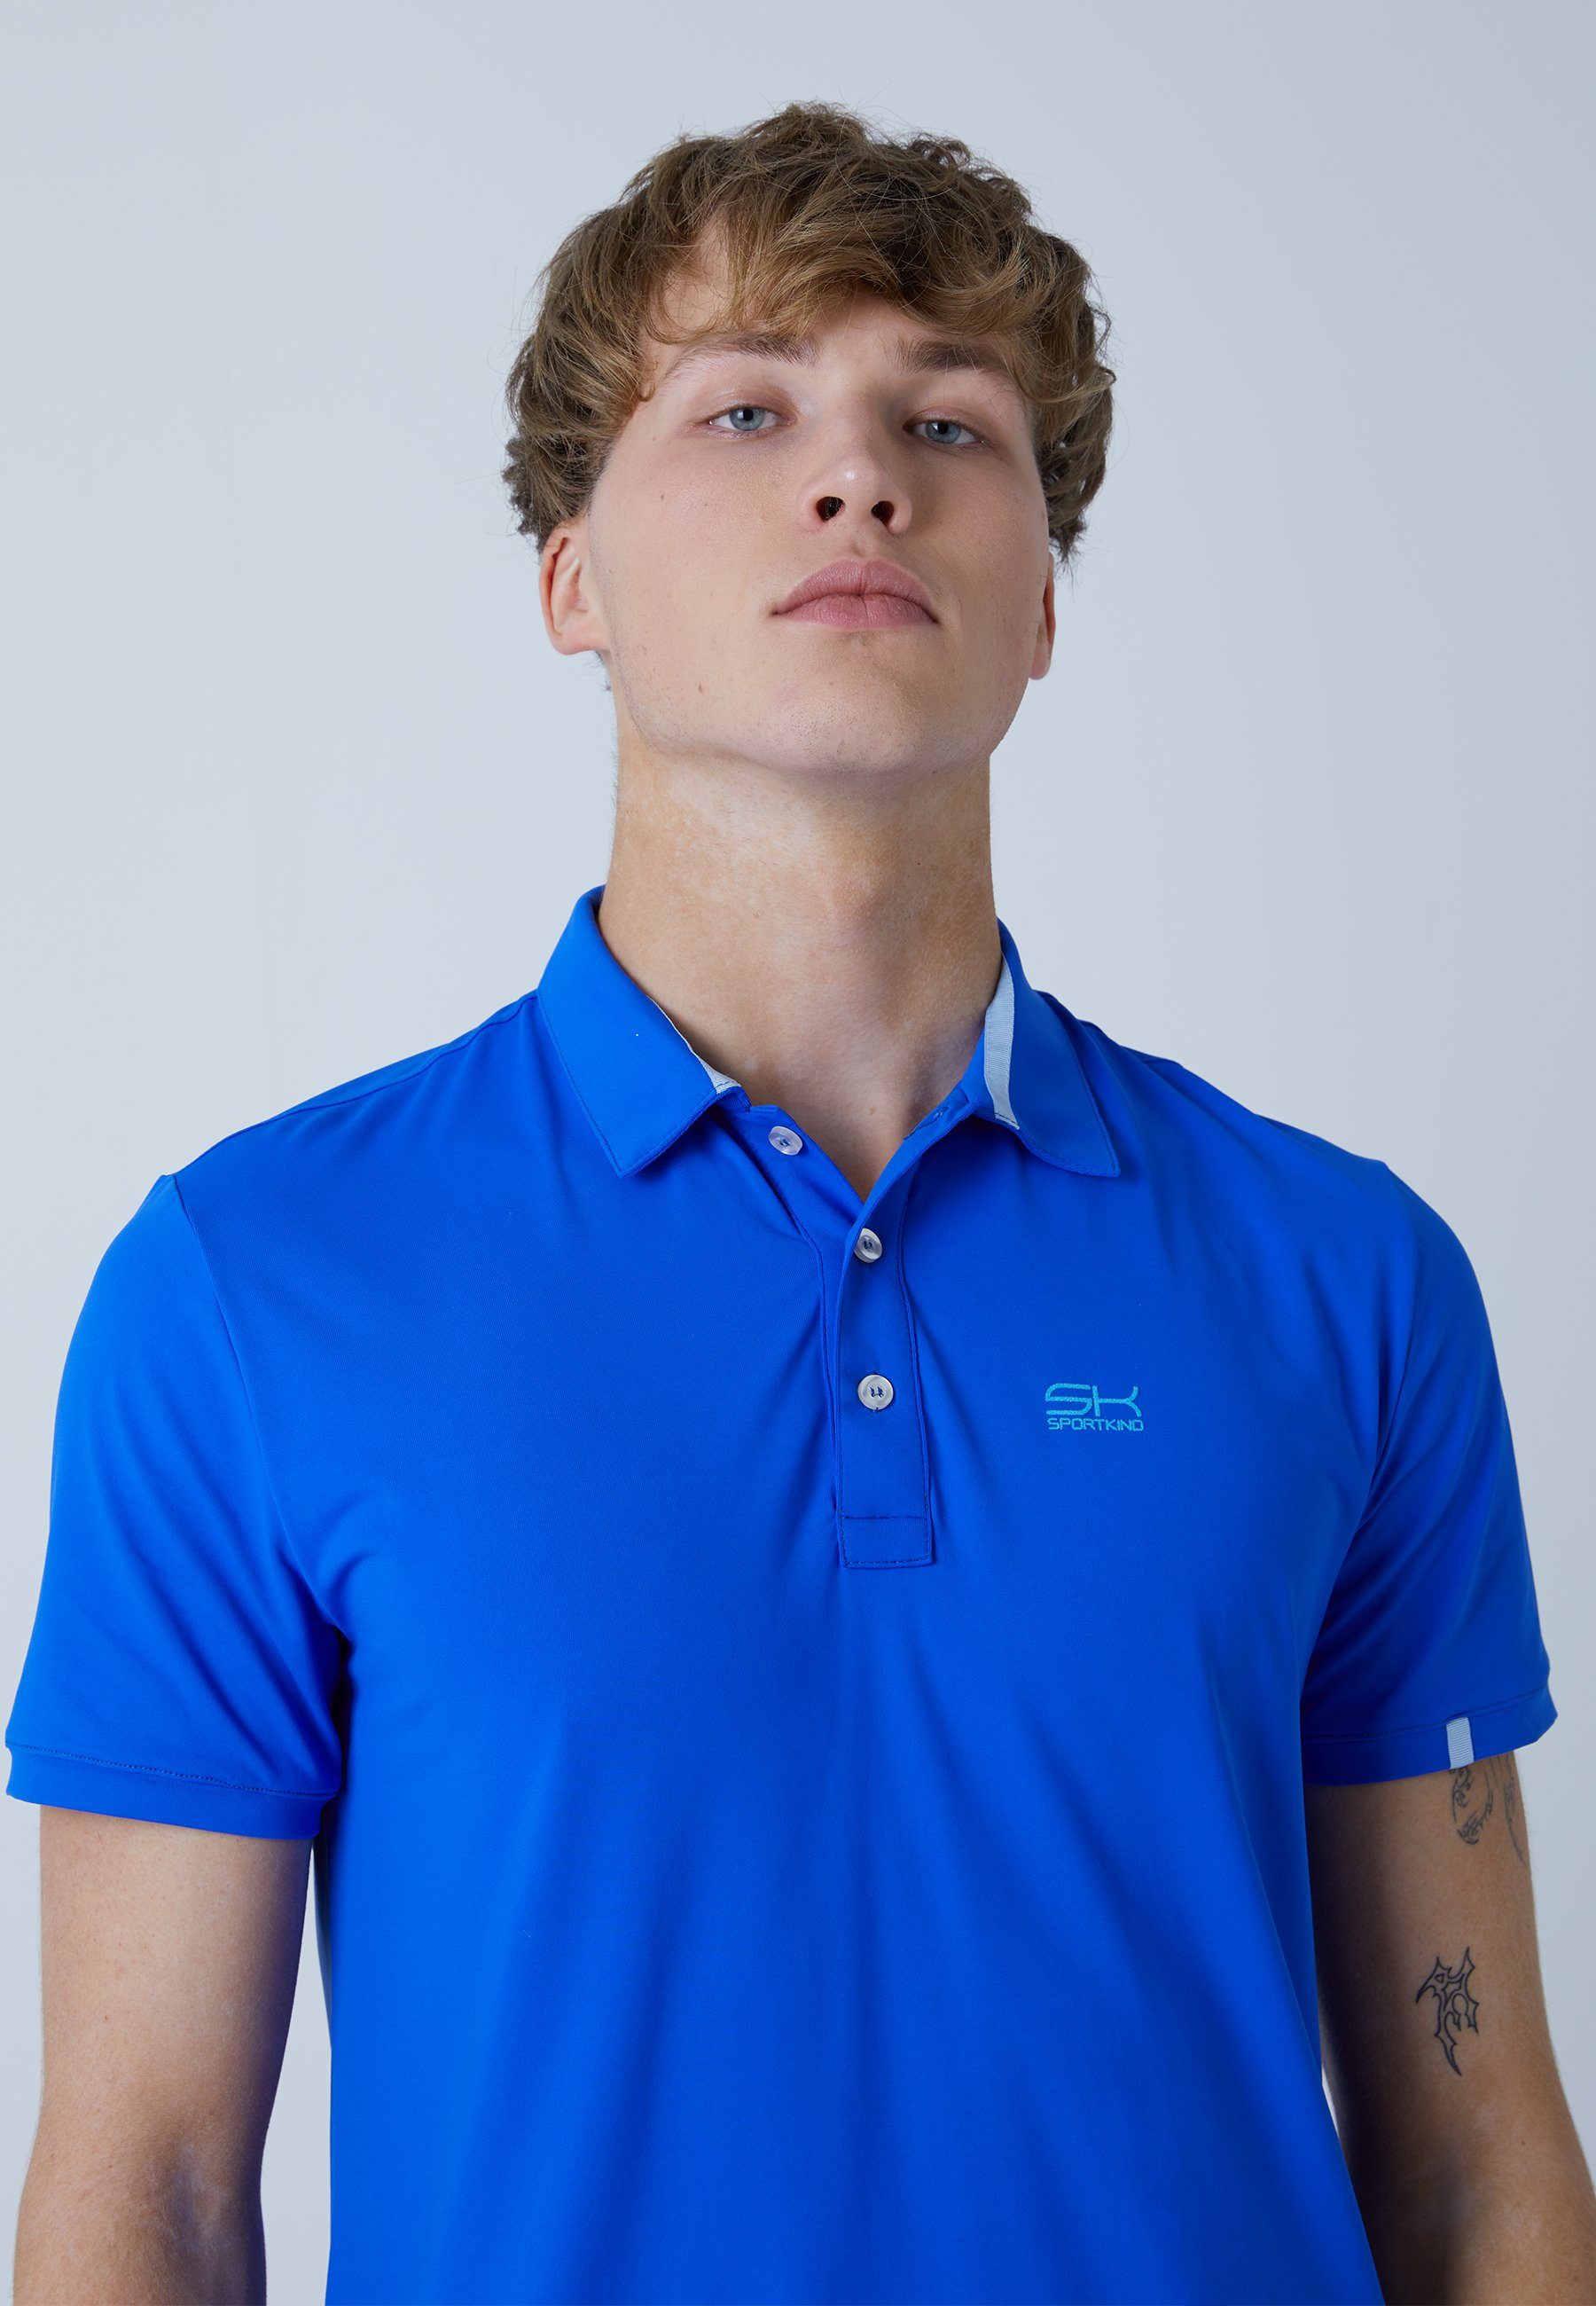 Golf Herren Funktionsshirt SPORTKIND & Shirt Kurzarm Jungen kobaltblau Polo